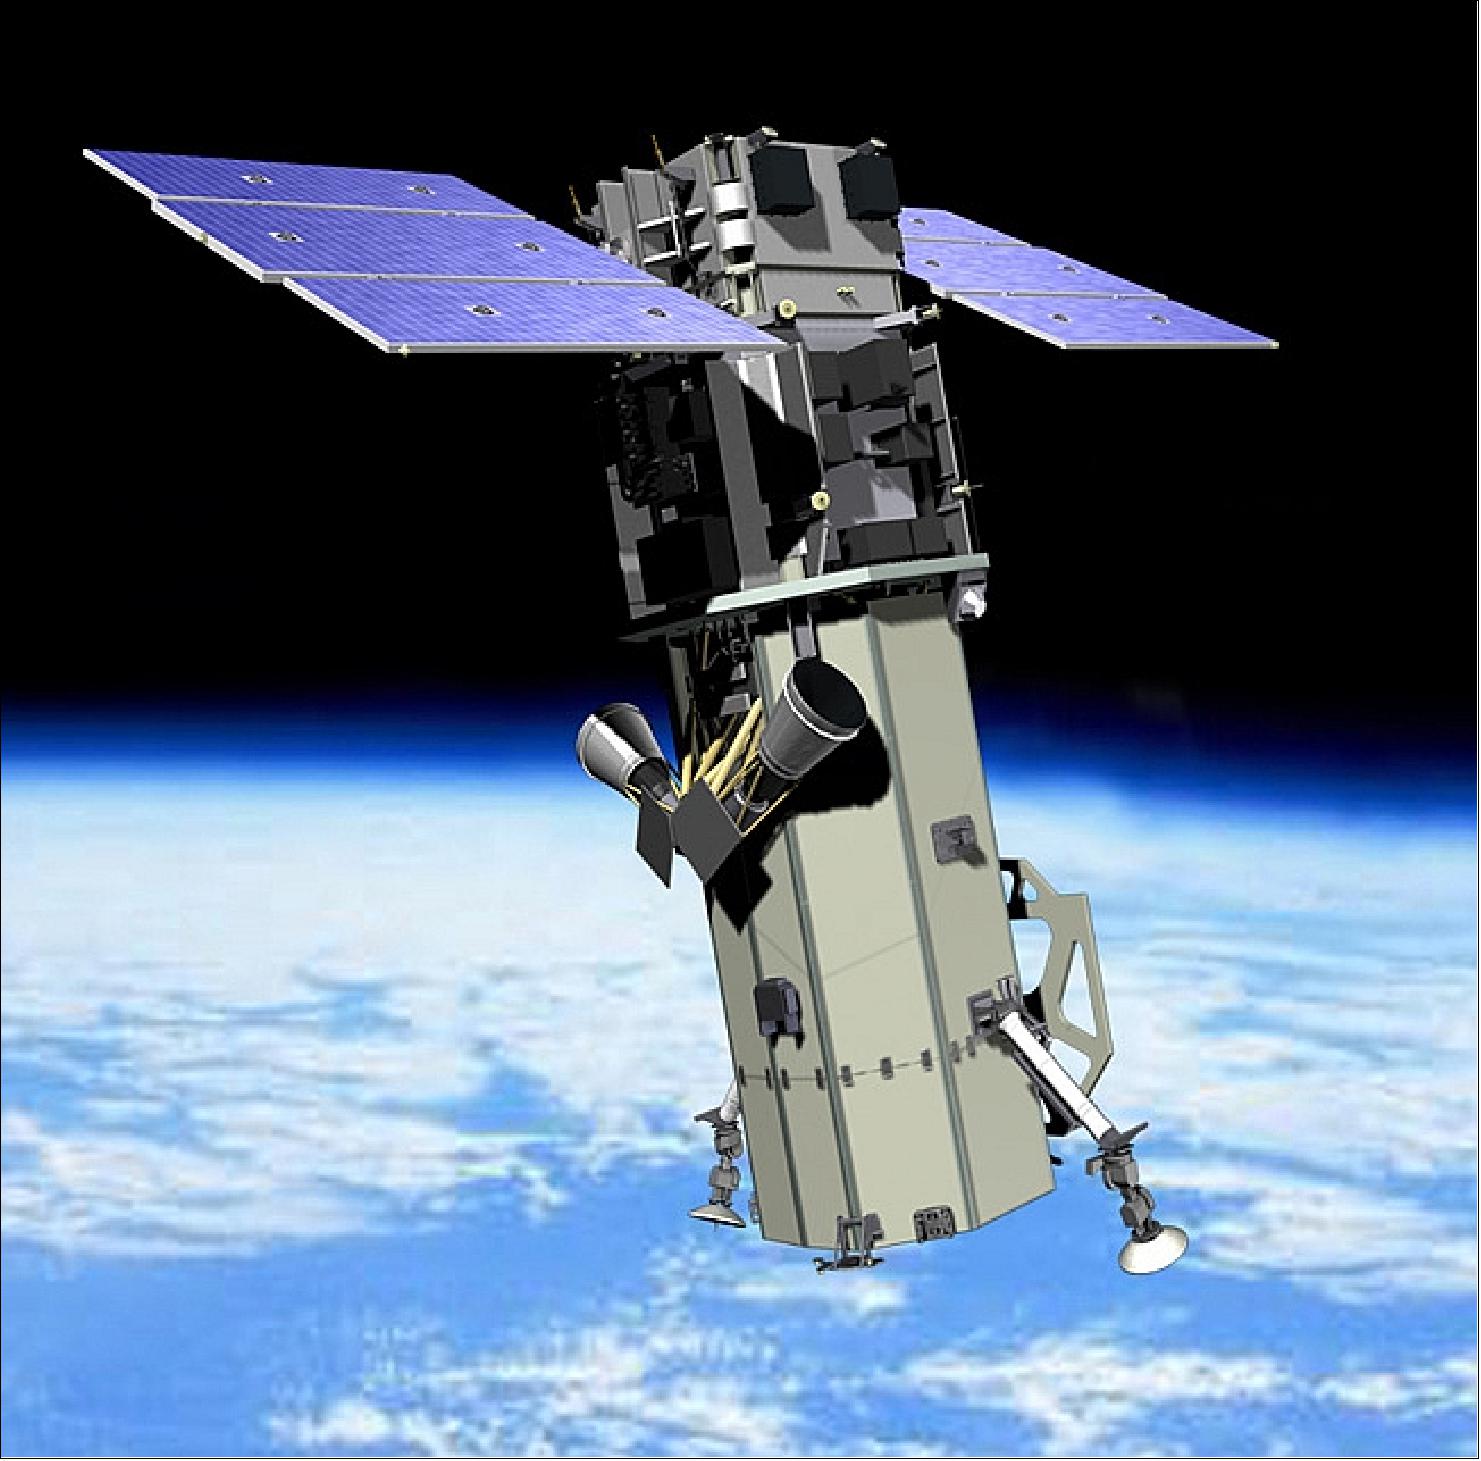 Figure 1: Artist's rendition of the deployed WorldView-3 spacecraft in orbit (image credit: DigitalGlobe)